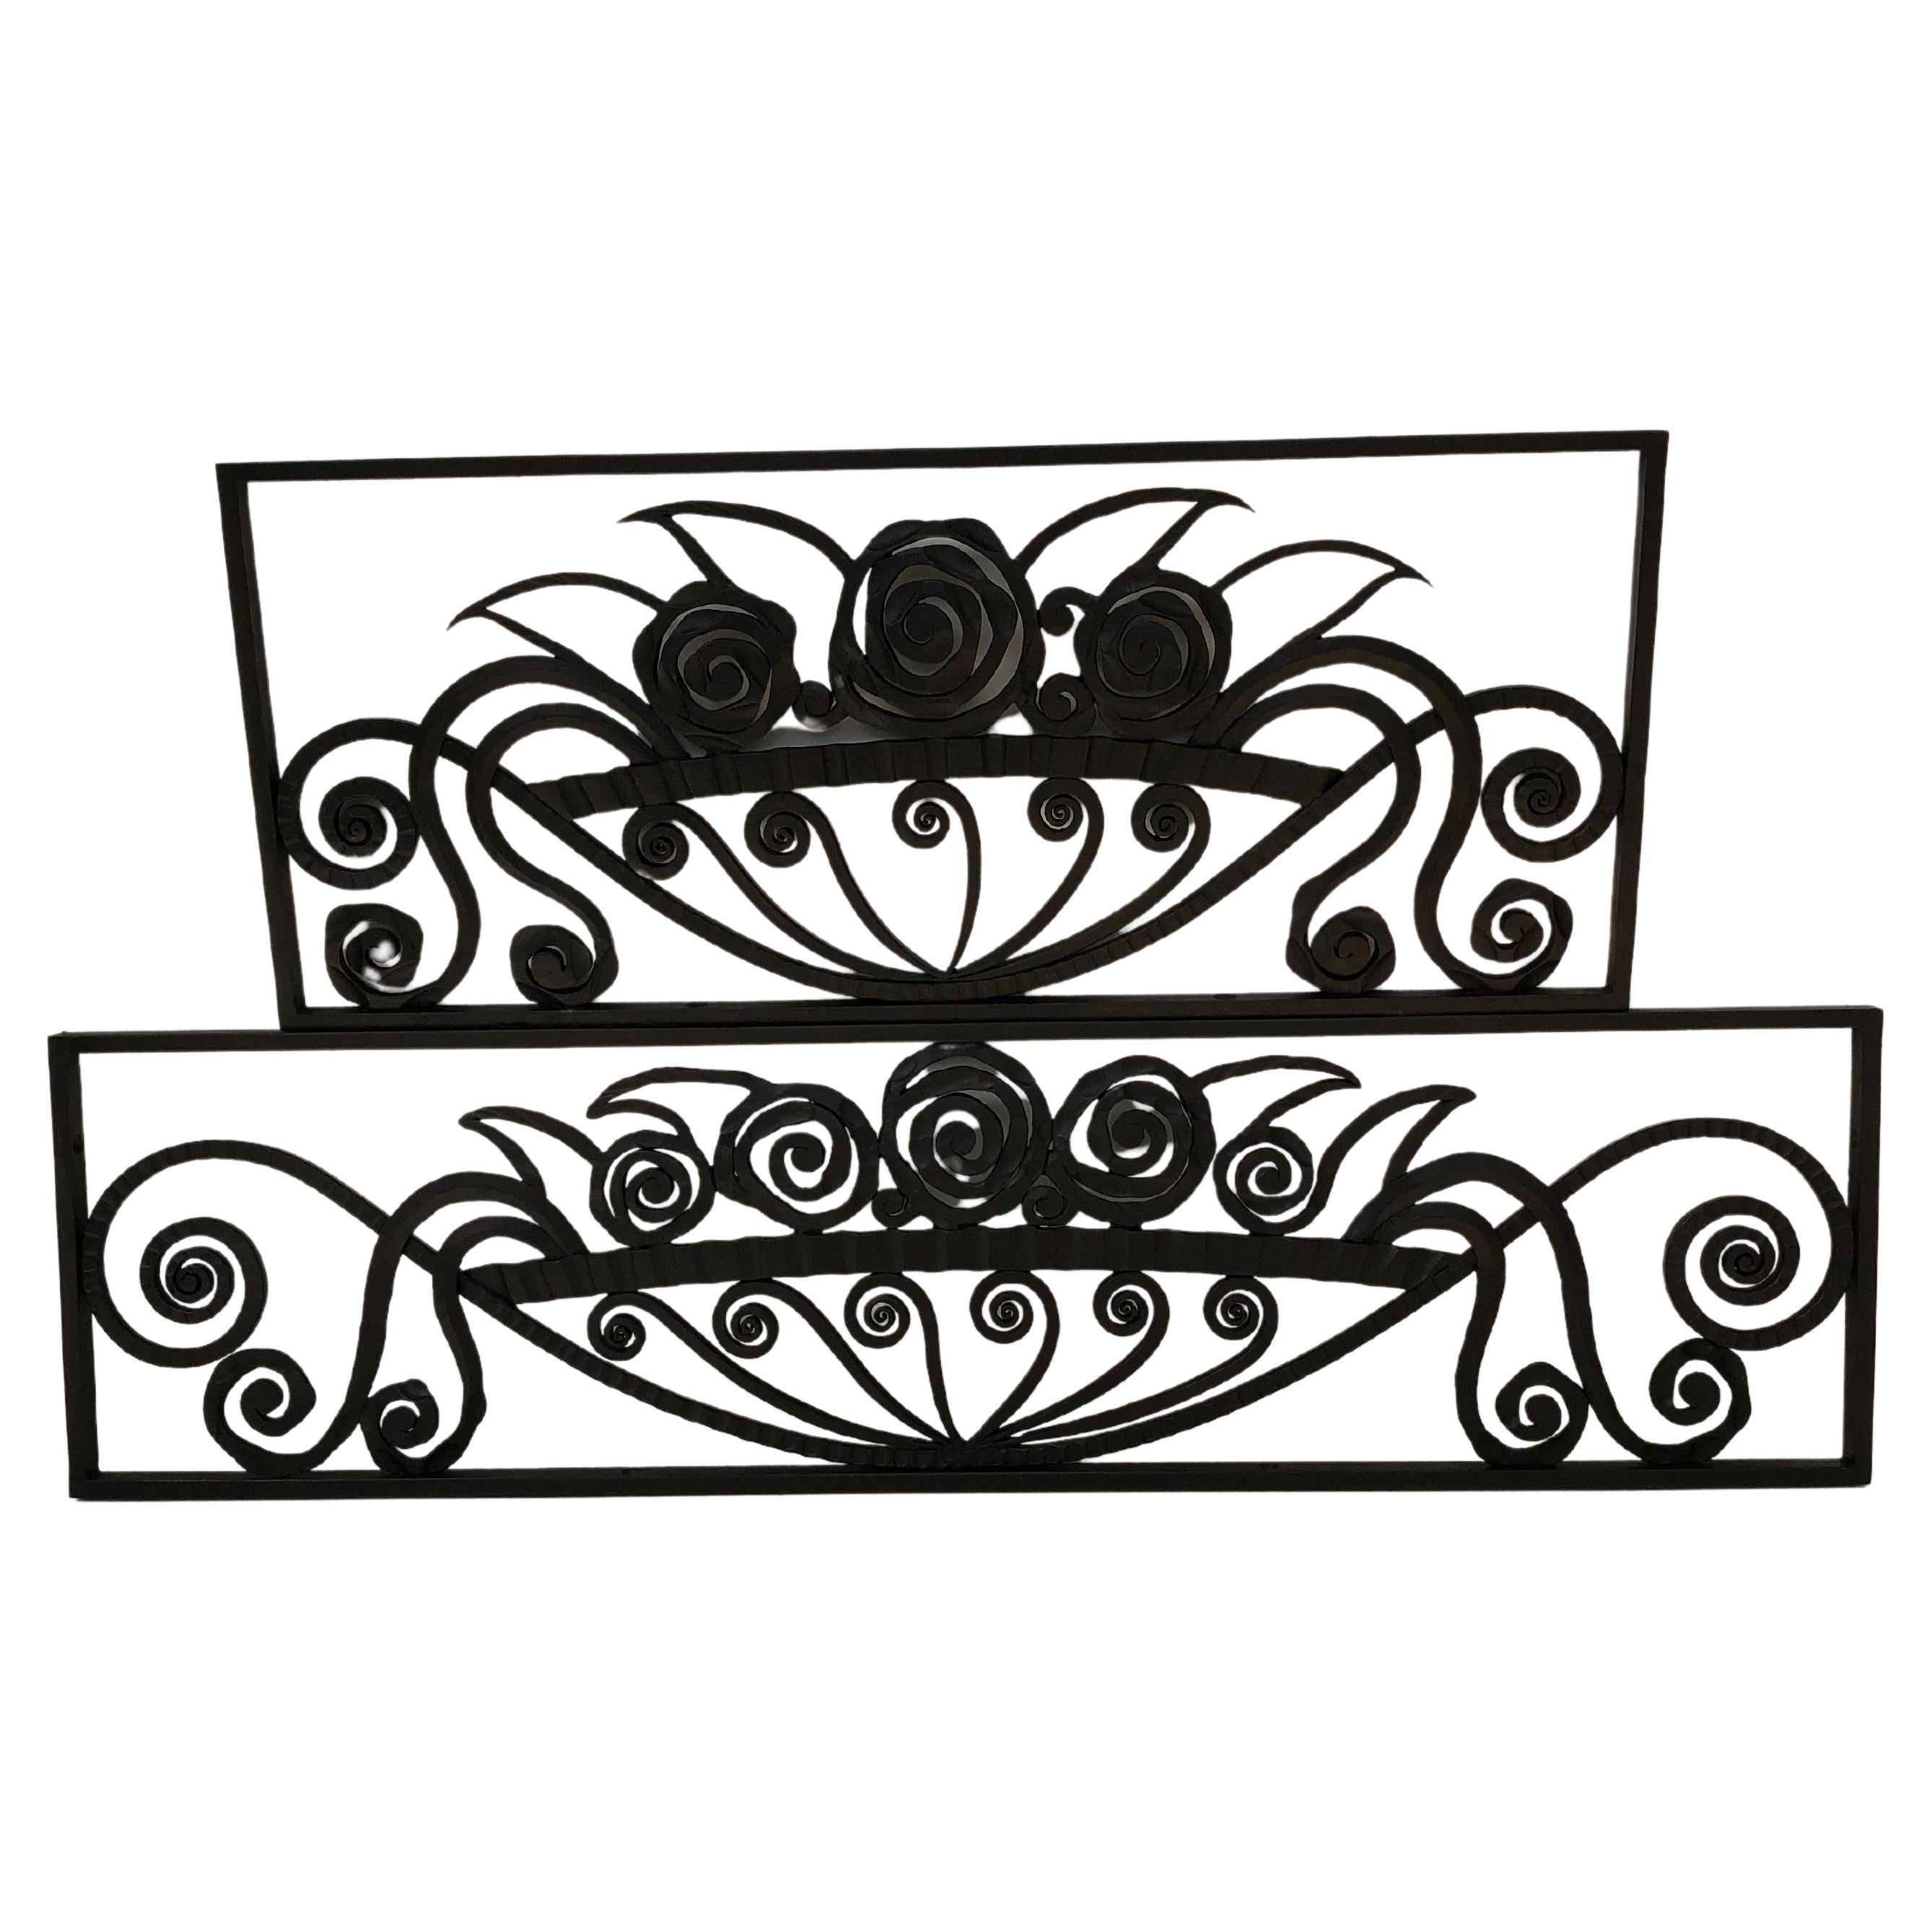 Paul Kiss 2 decorative elements Art Deco wrought iron door transom